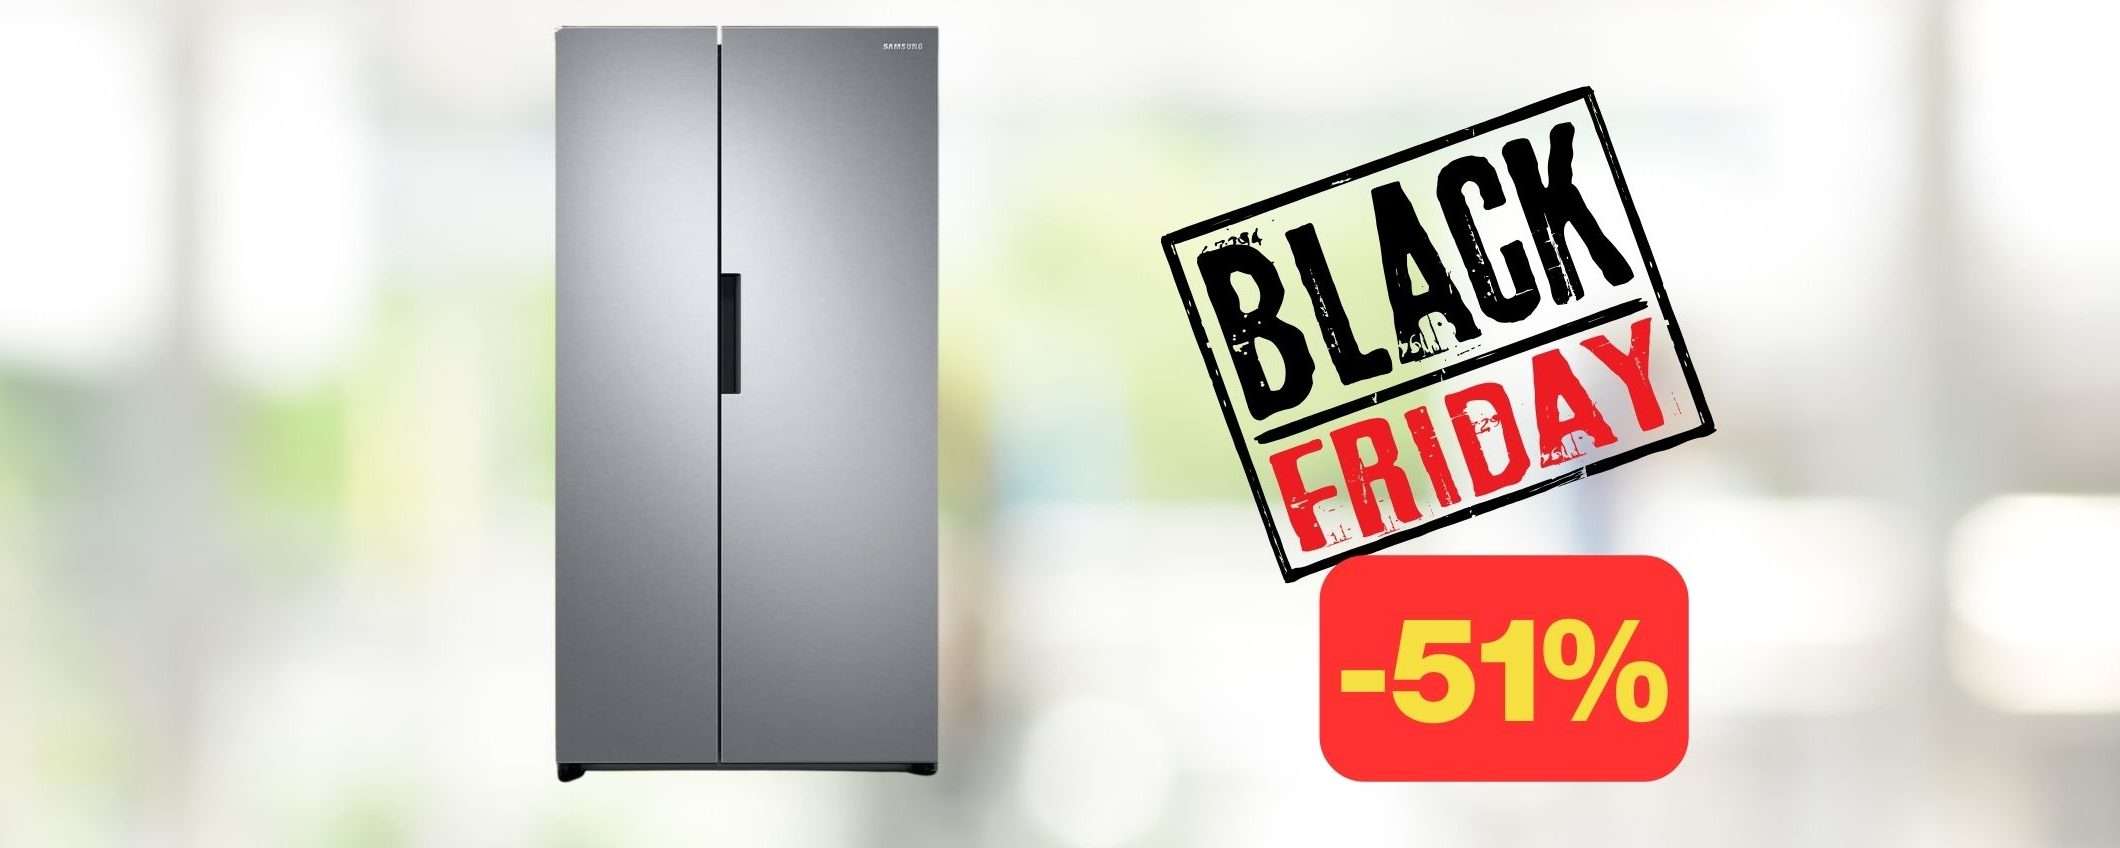 Black Friday Amazon: frigorifero Samsung Side by Side in MEGA sconto (-51%)